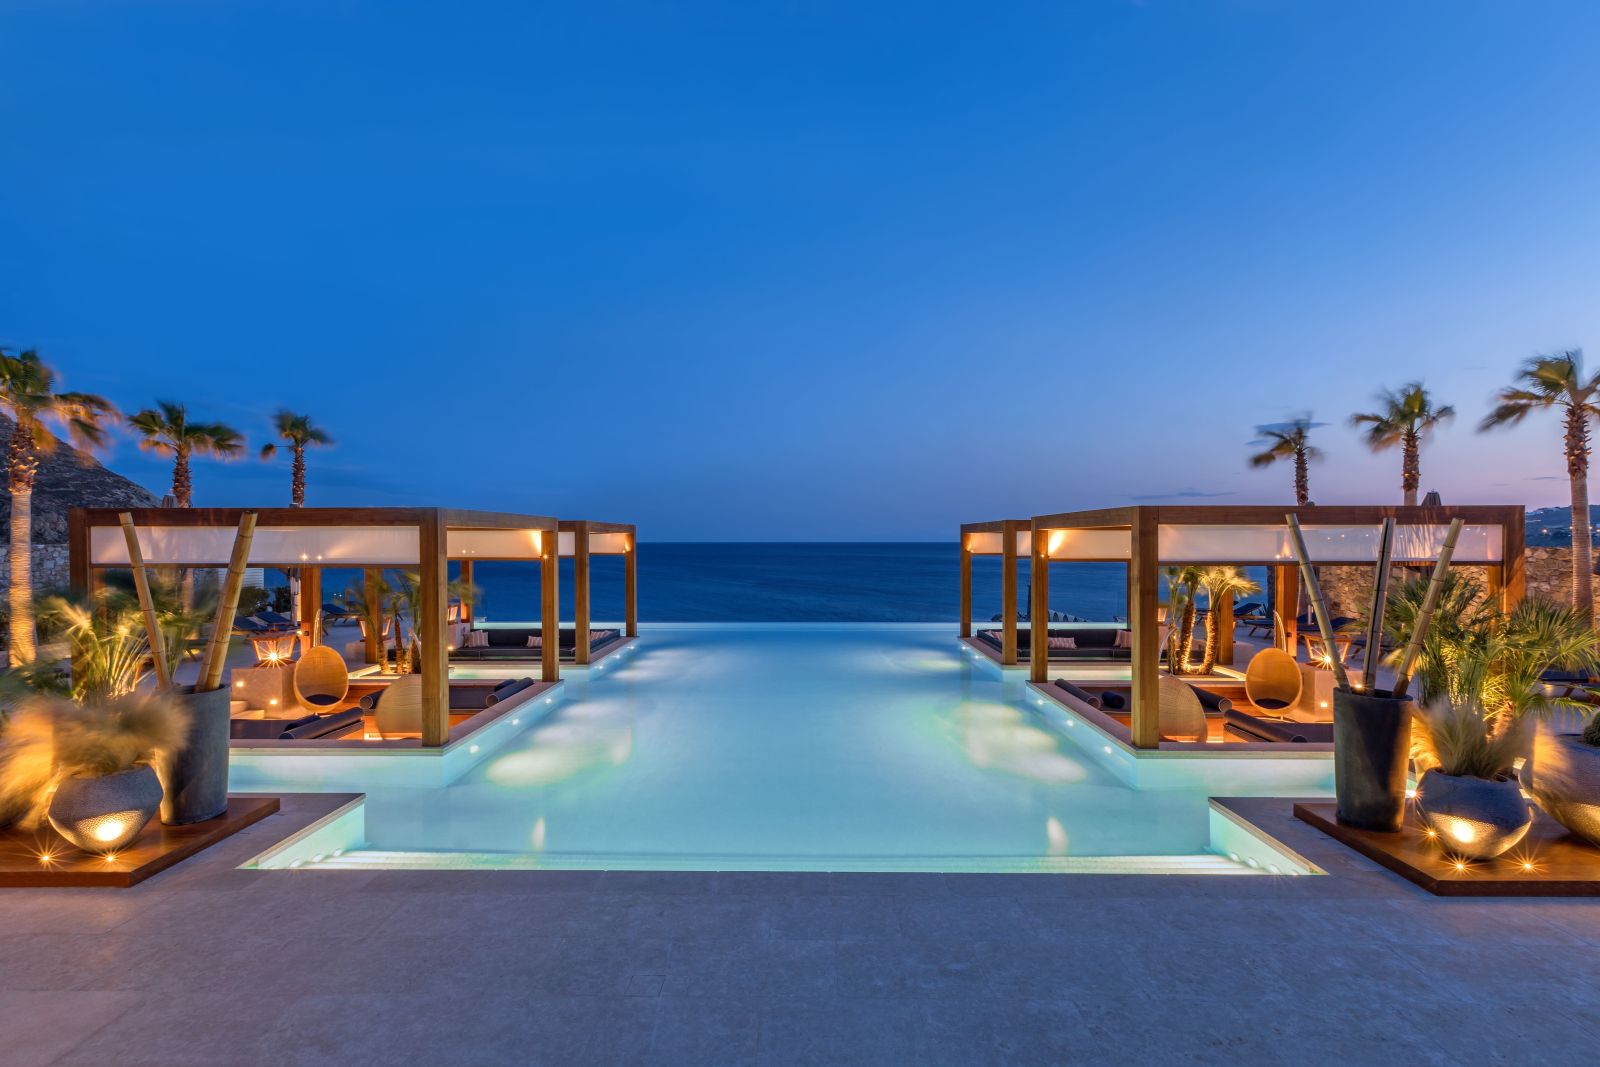 Oasis swimming pool at the Santa Marina Resort and Villas in Mykonos Greece